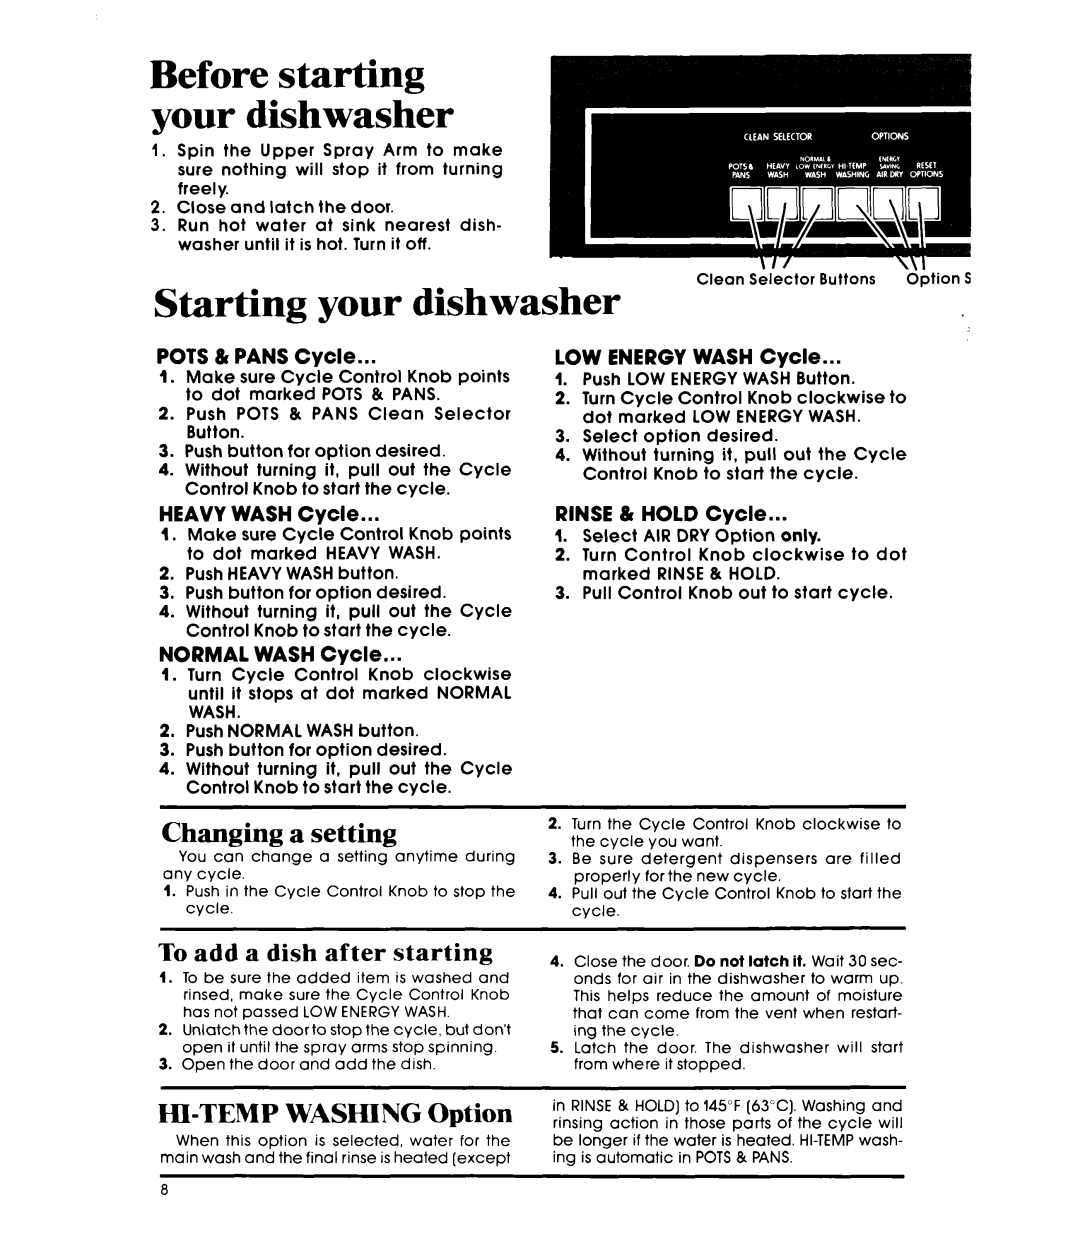 Whirlpool DU5504XM manual Starting your dishwasher, Changing a setting, To add a dish after starting, HI-TEMPWASHING Option 